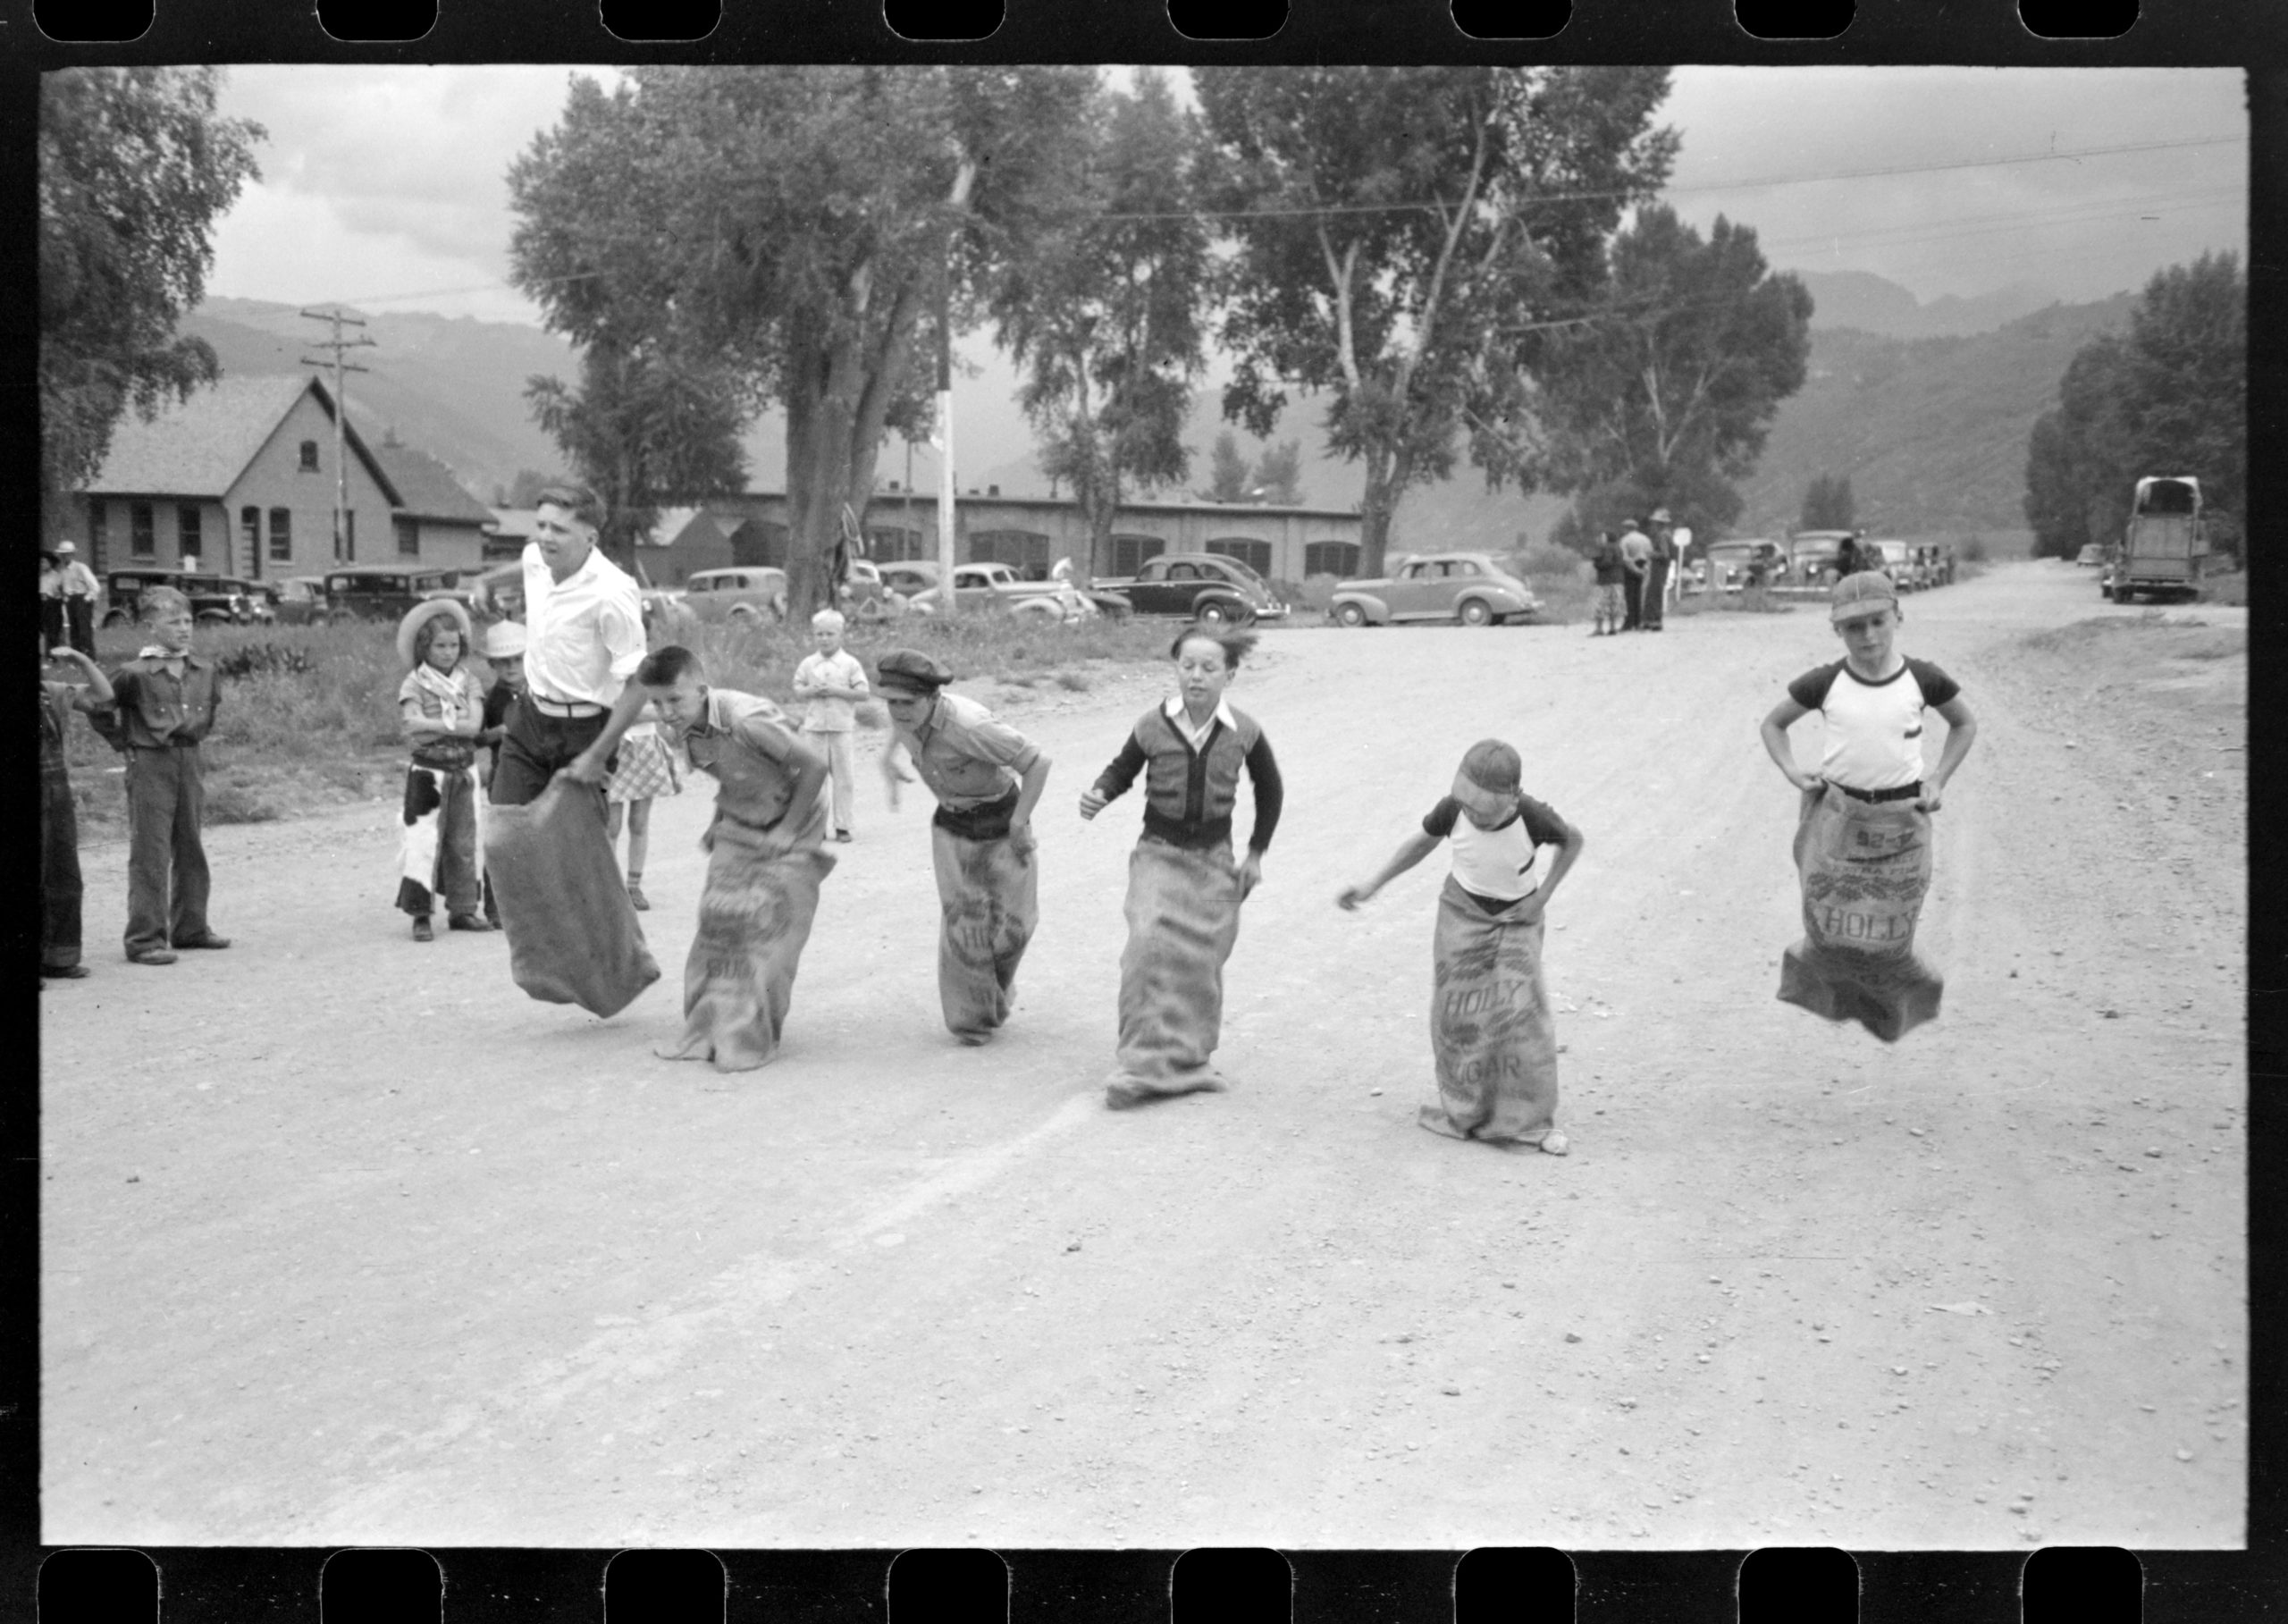 Labor Day celebration in Colorado, circa 1940. Library of Congress